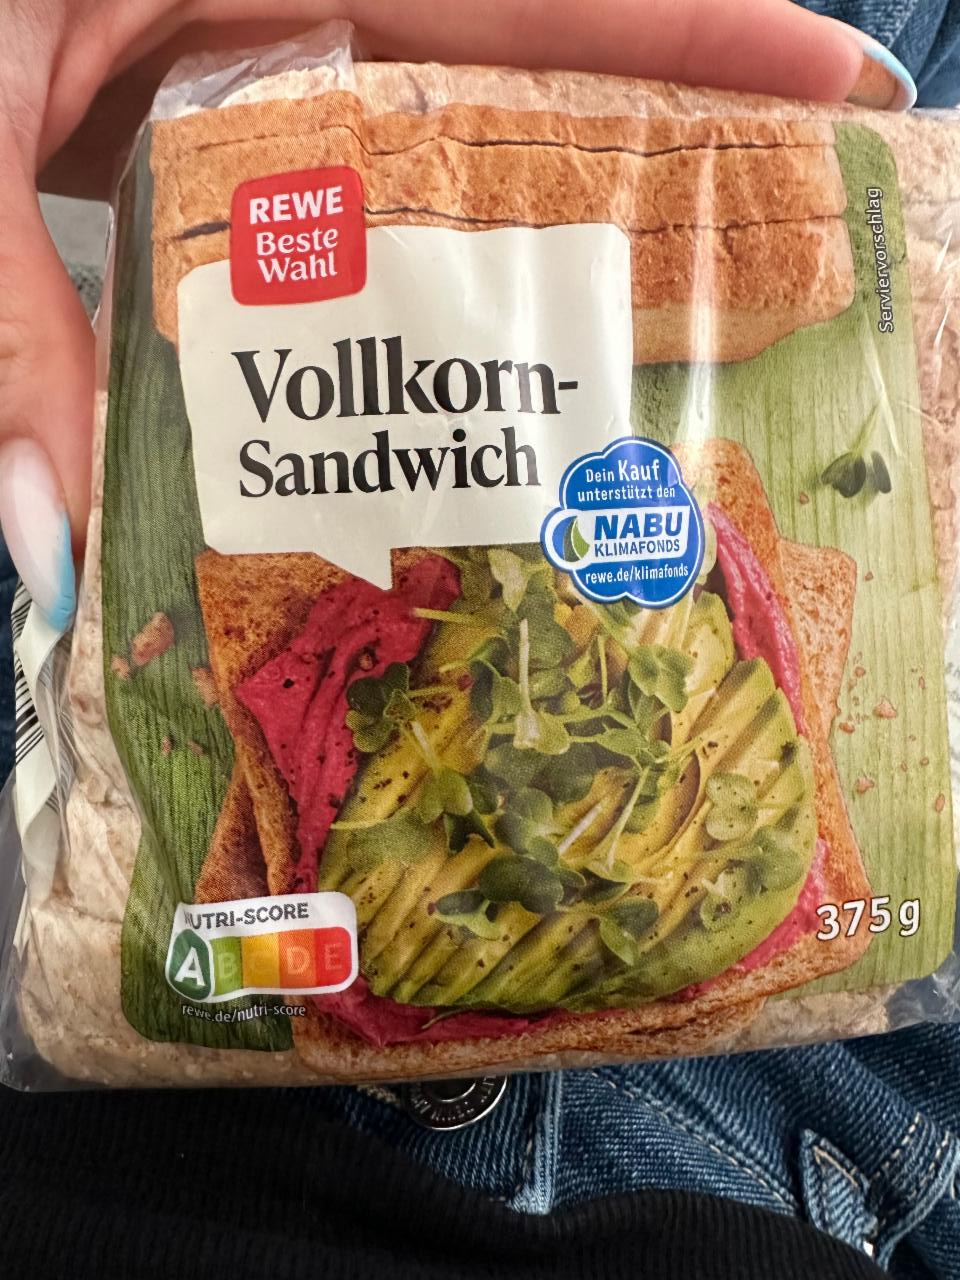 Фото - Vollkorn sandwich Rewe beste wahl